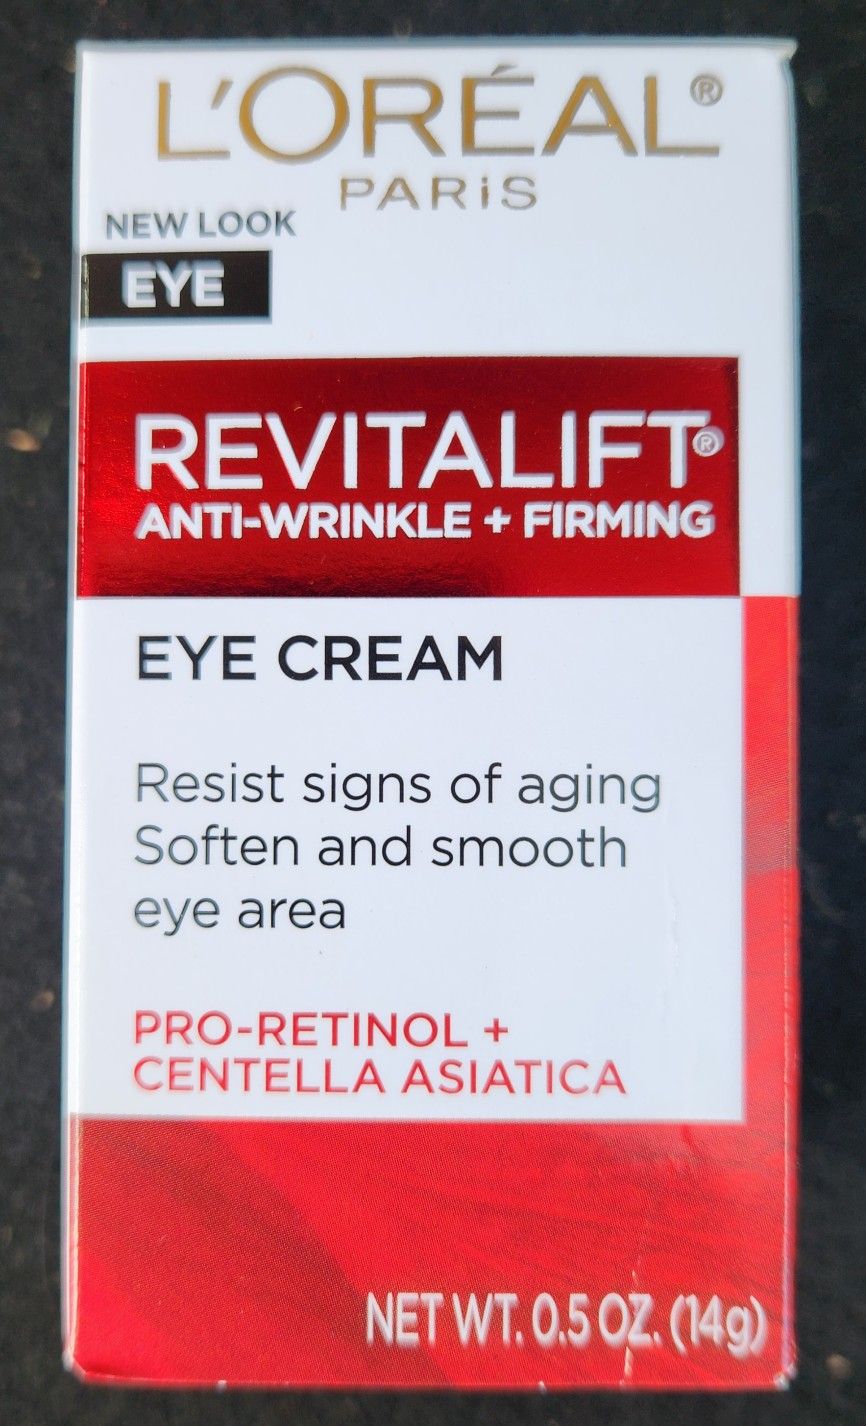 L'Oreal Paris Revitalift Anti Wrinkle Firming Eye Cream, 0.5 oz